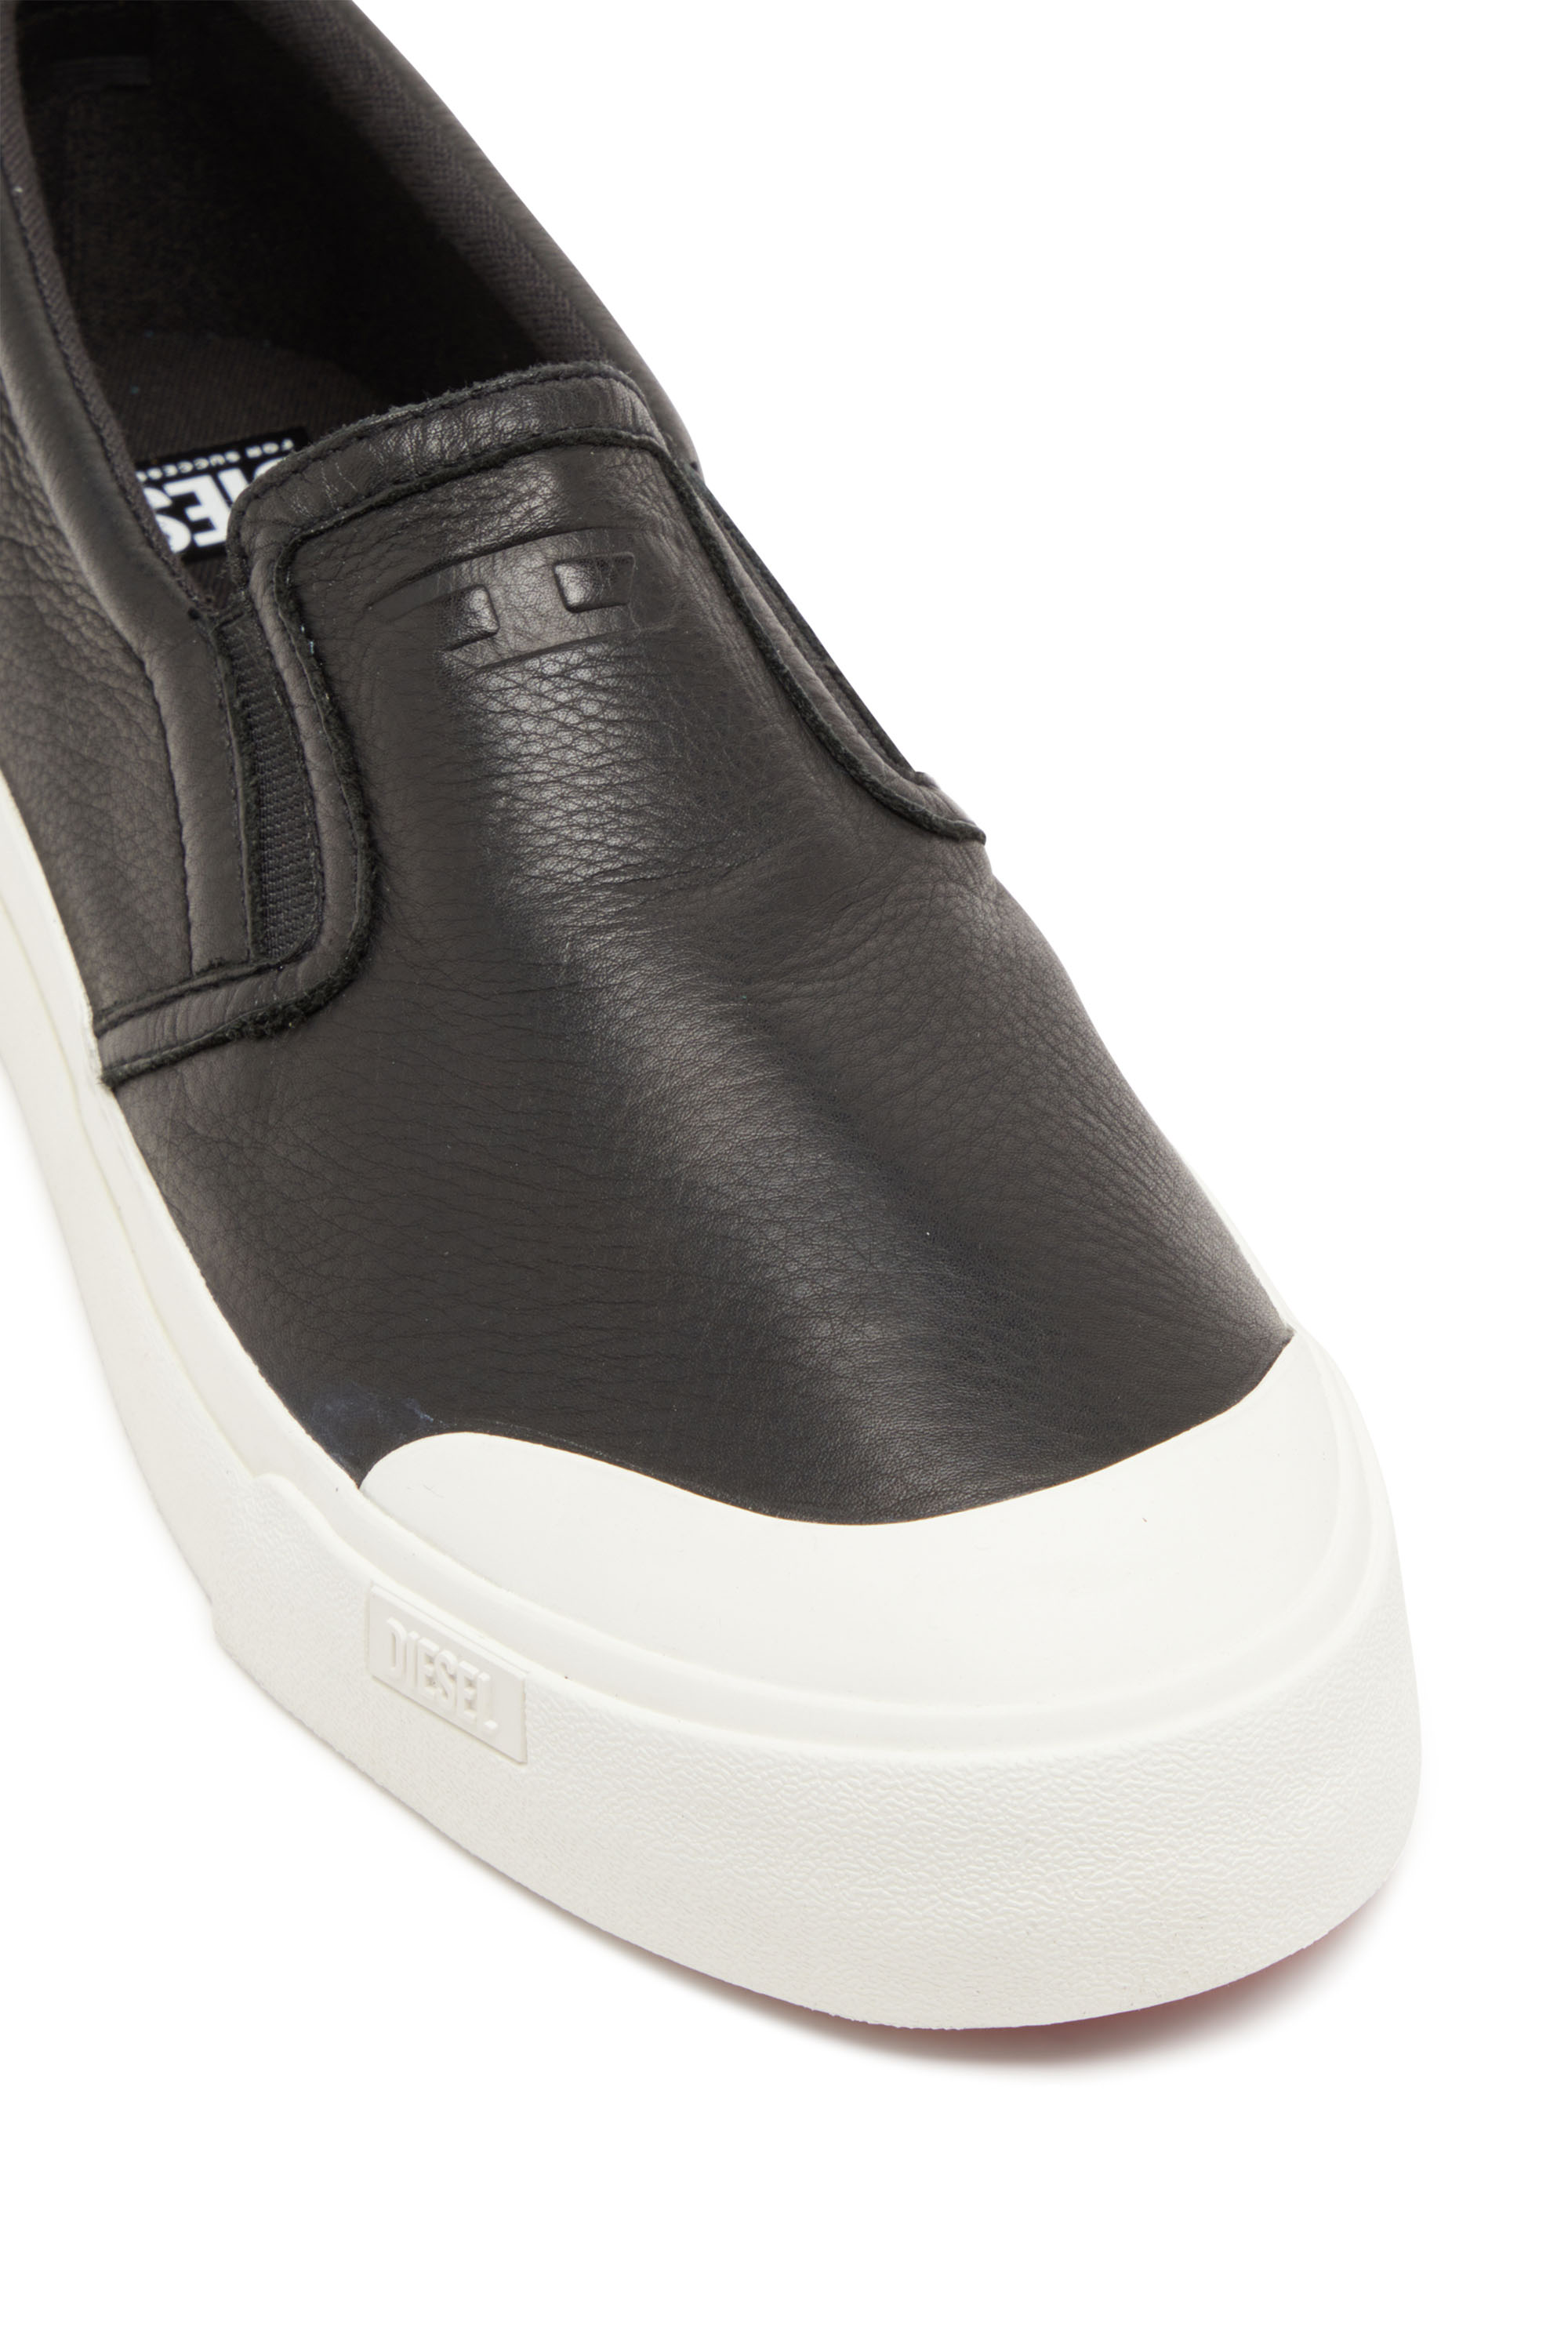 Diesel - S-ATHOS SLIP ON, Male S-Athos-Slip-on sneakers in plain leather in ブラック - Image 6